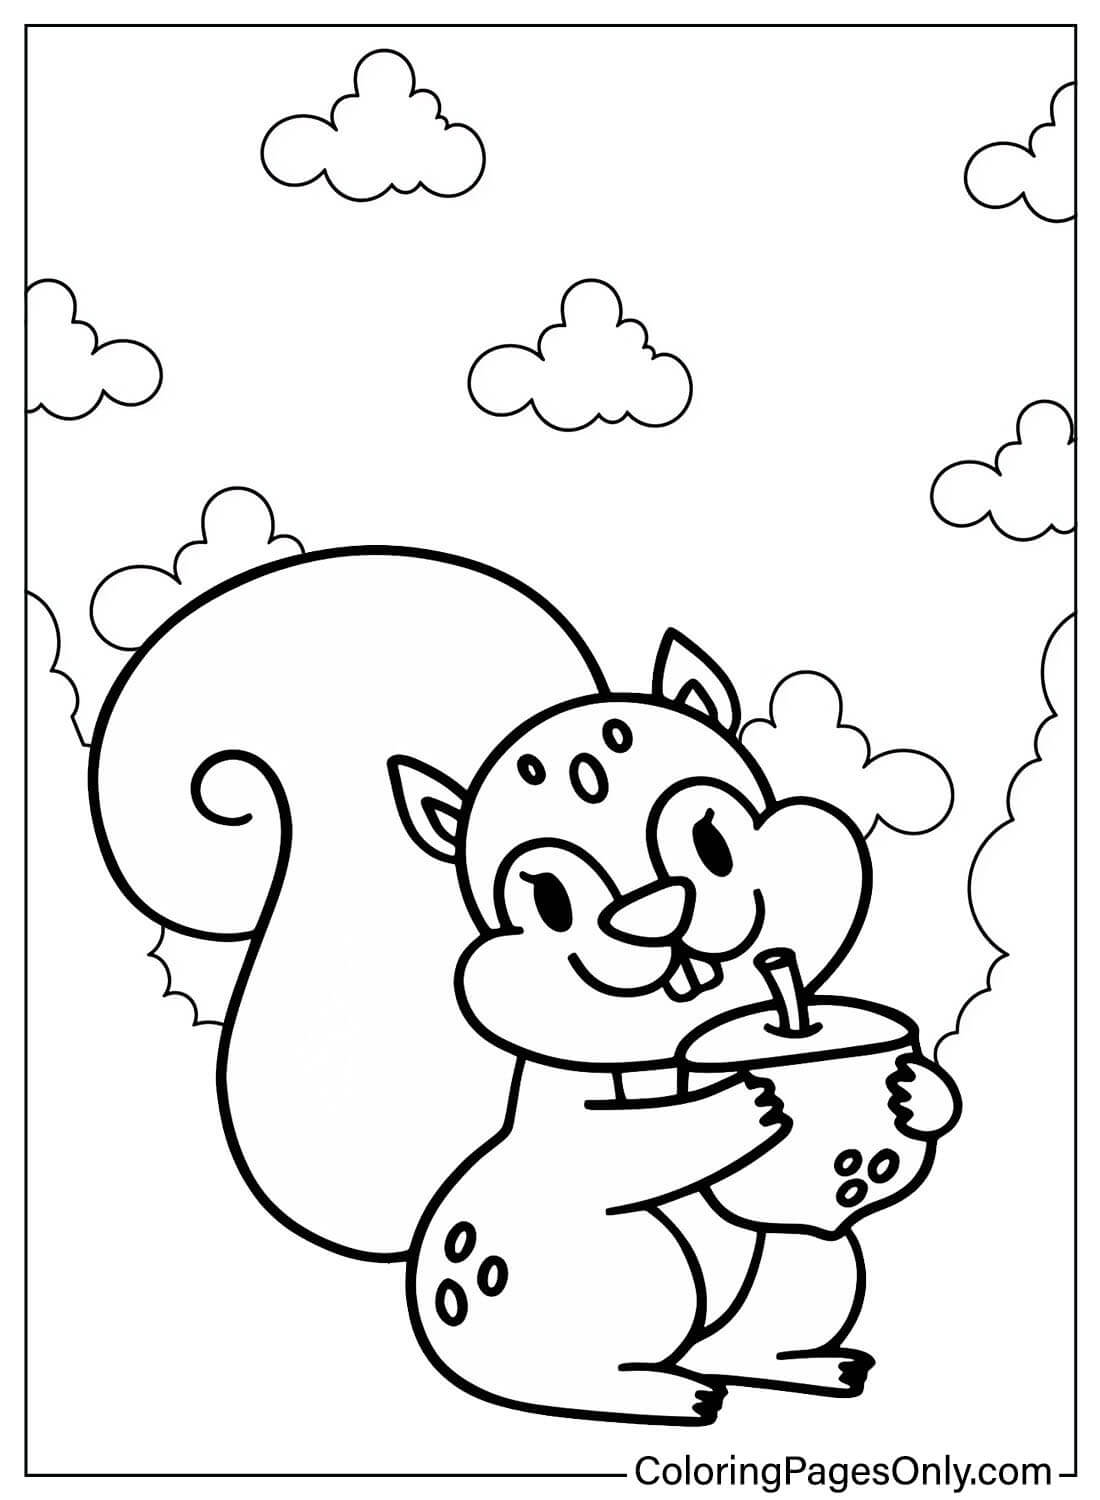 Printable Coloring Page Chipmunk from Chipmunk